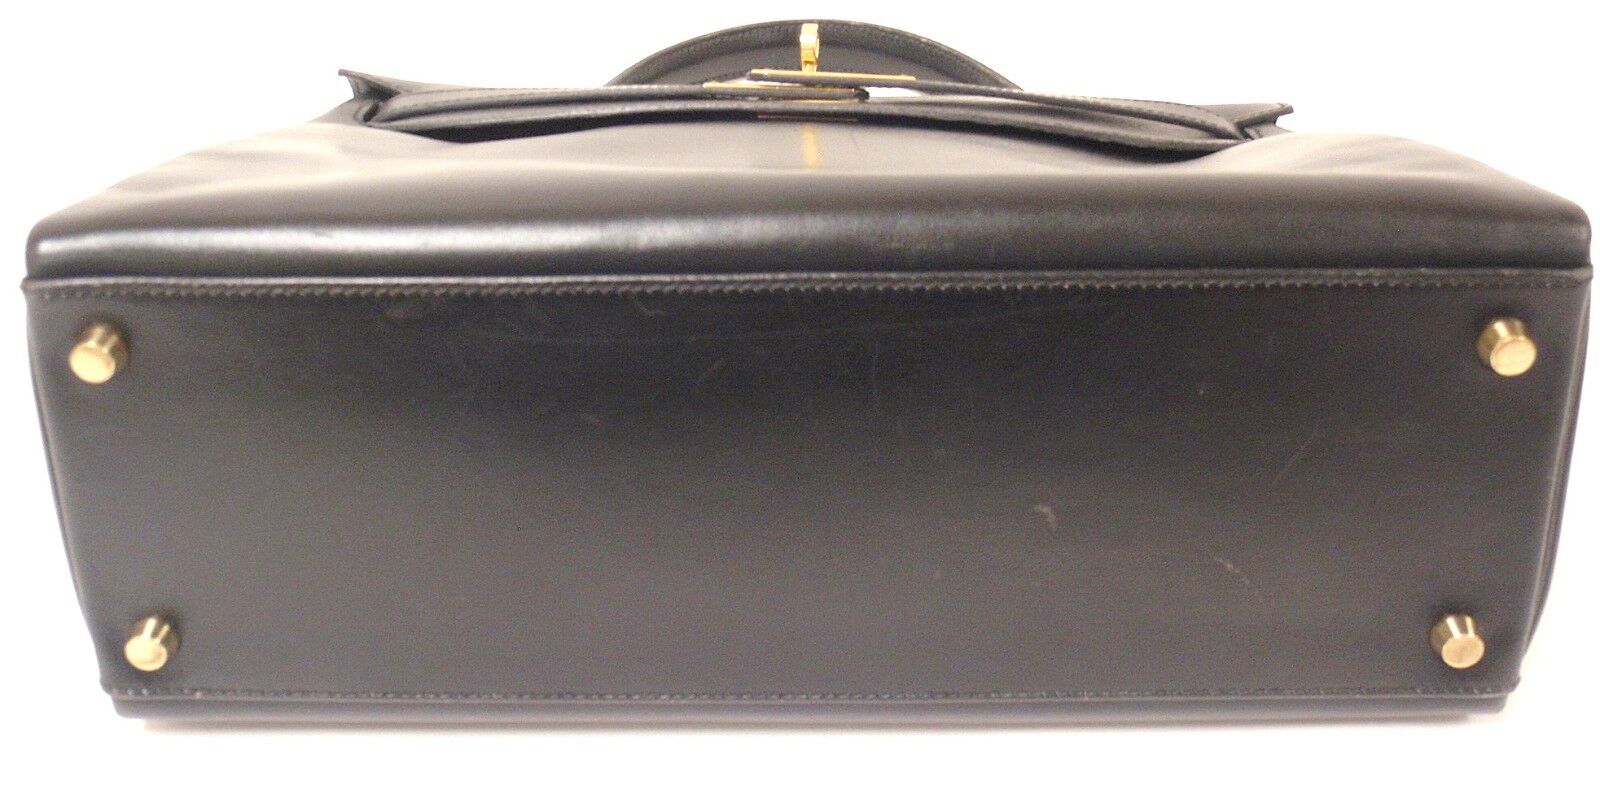 Hermès Kelly 32 cm Handbag in Black Box Leather